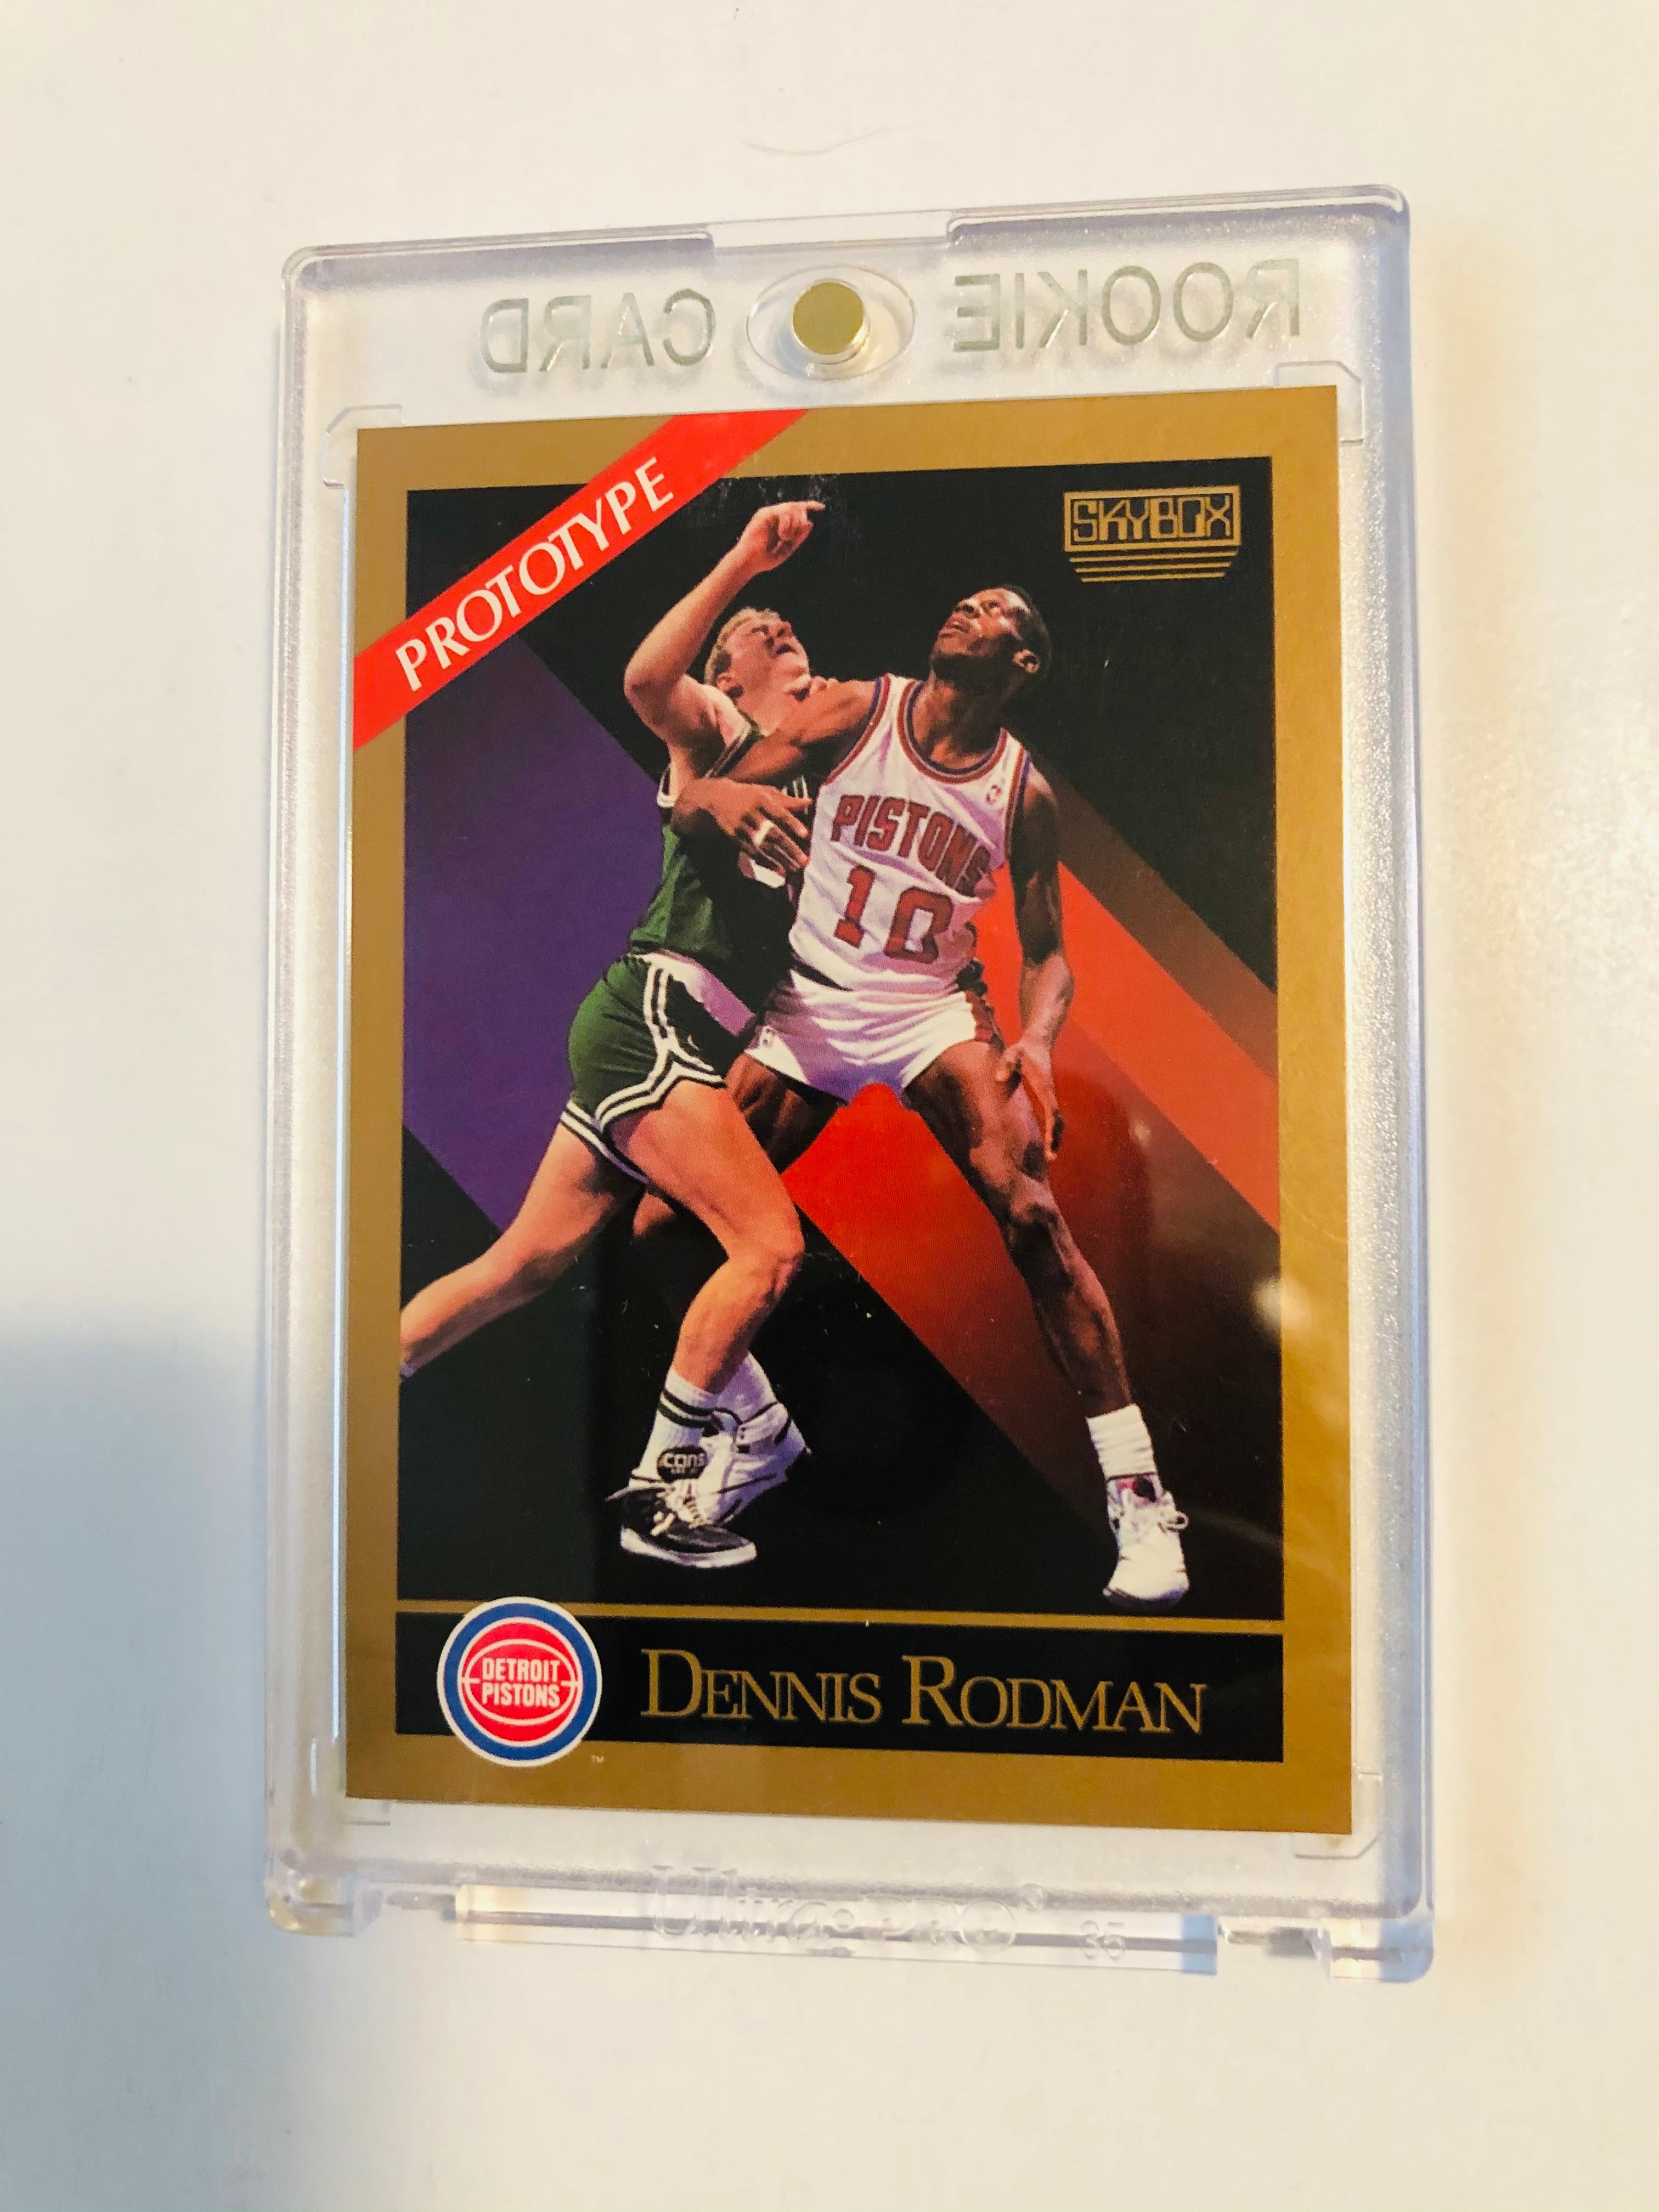 Dennis Rodman Skybox basketball rare limited issue promo card 1990